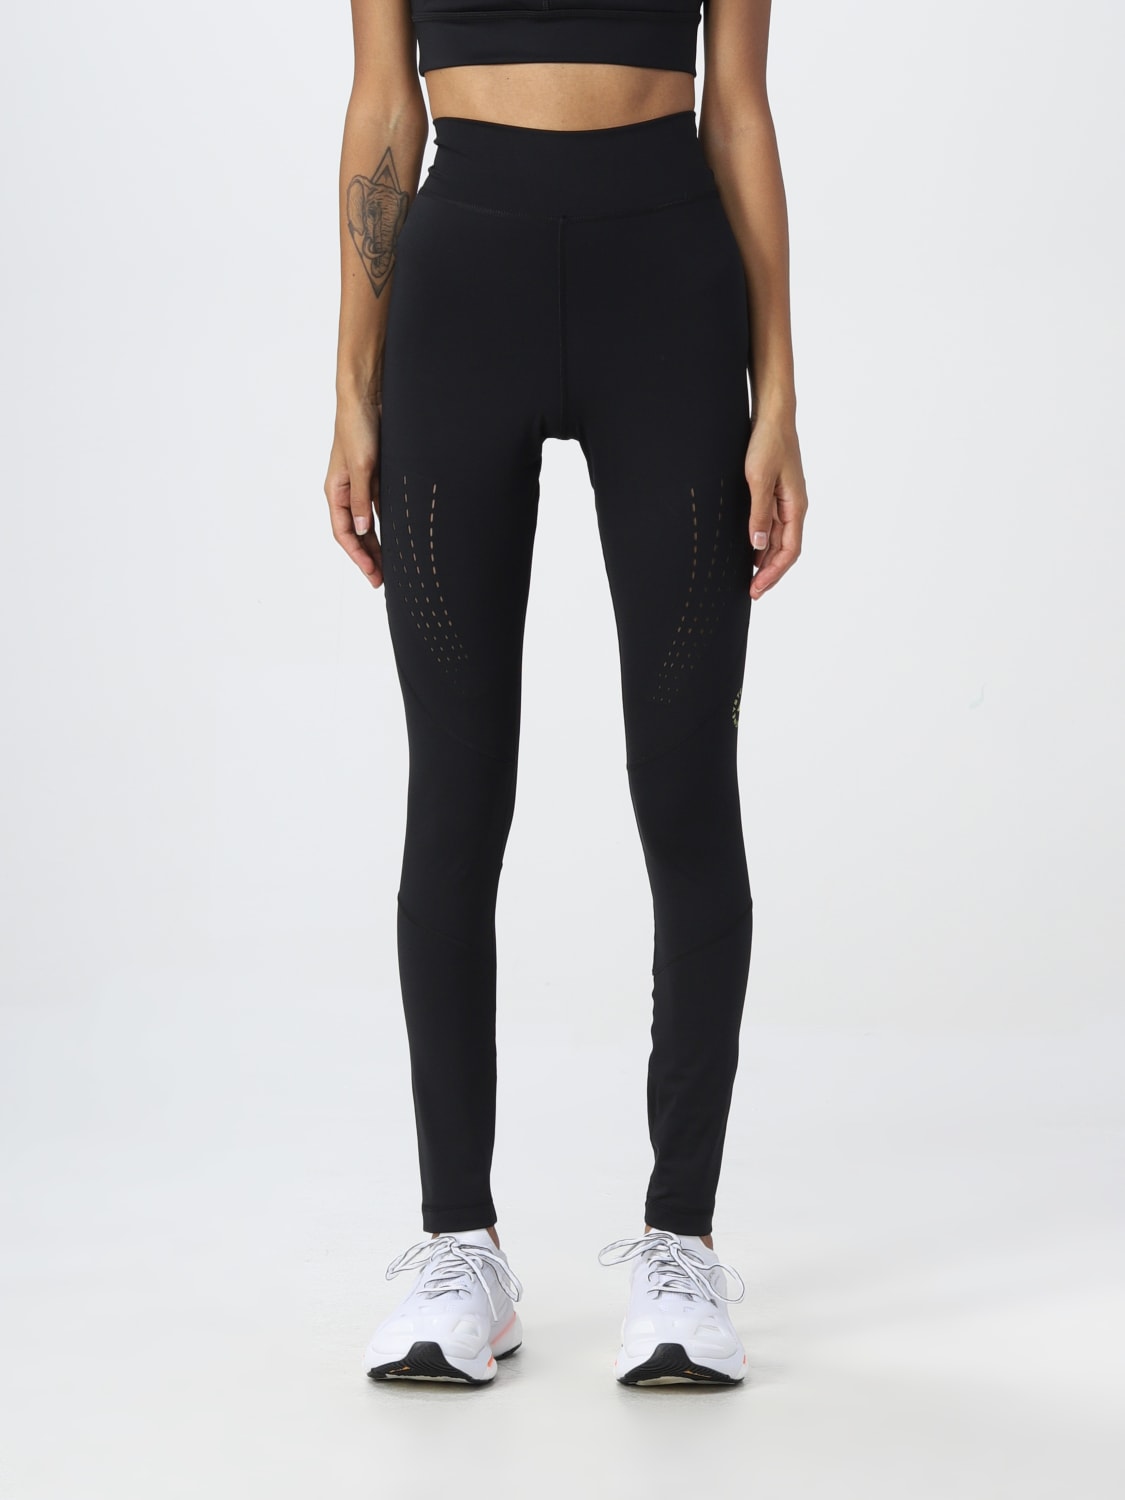 Adidas By Stella Mccartney pants for woman - Black | Adidas By Stella Mccartney pants HG6876 online on GIGLIO.COM